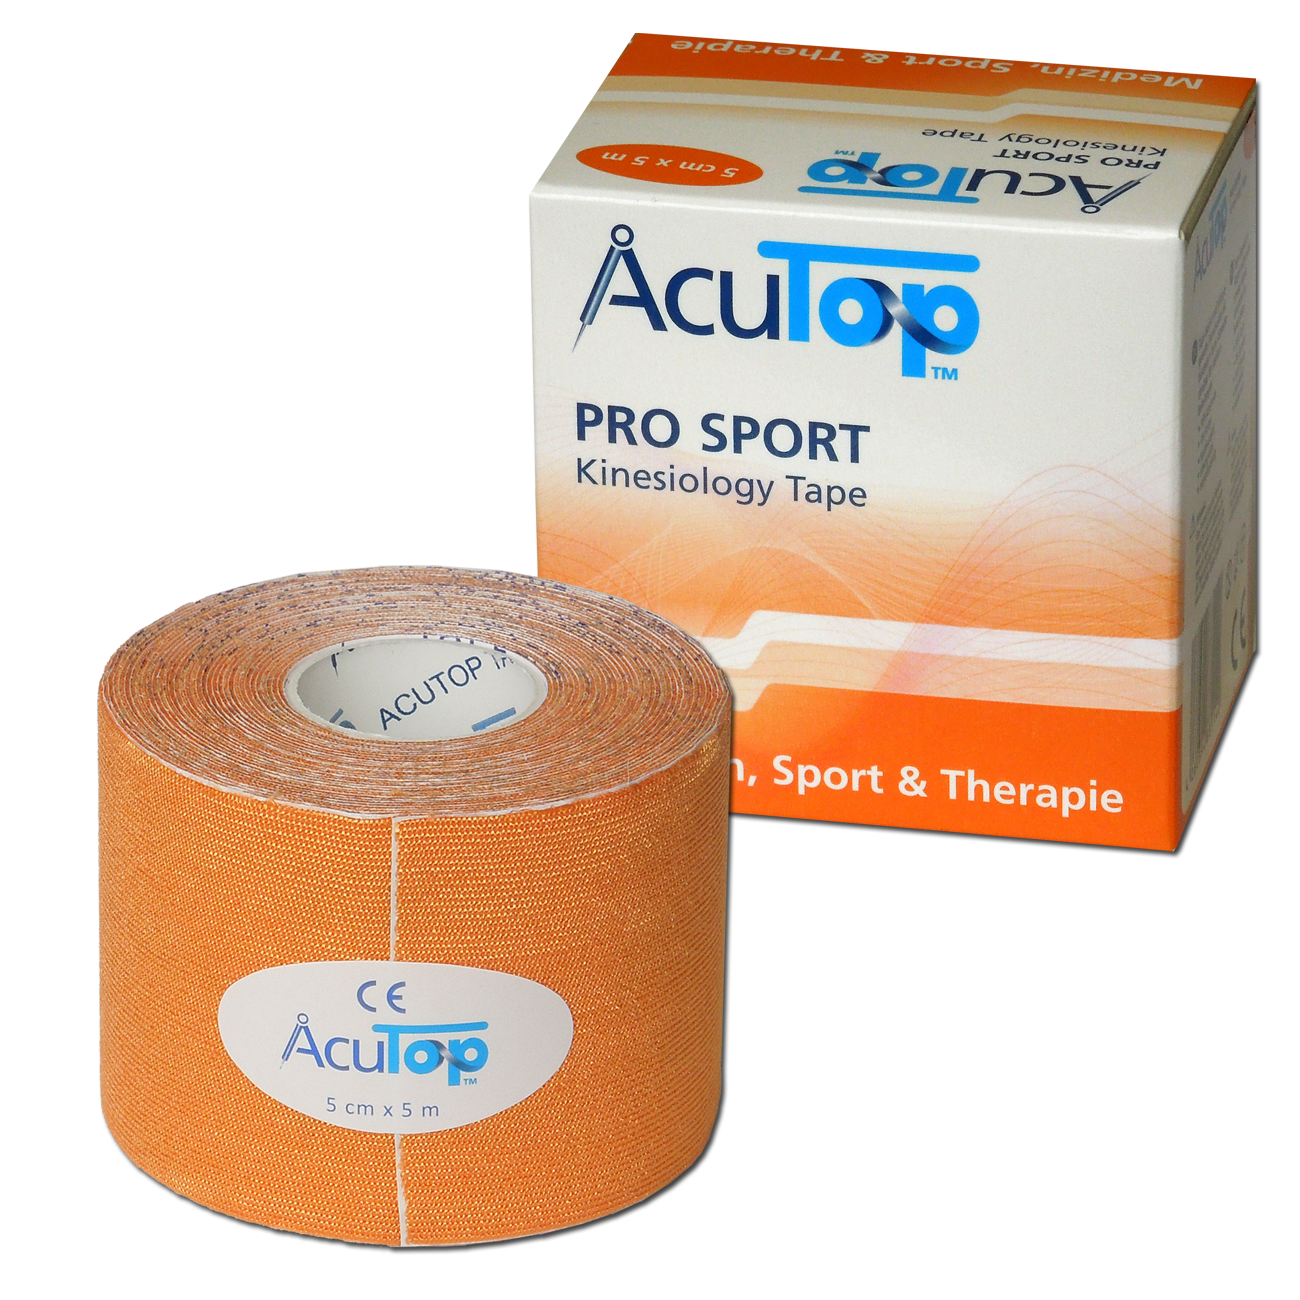 AcuTop Pro Sport - De beste sporttape - Oranje - 5cm x 5m - Intertaping.nl